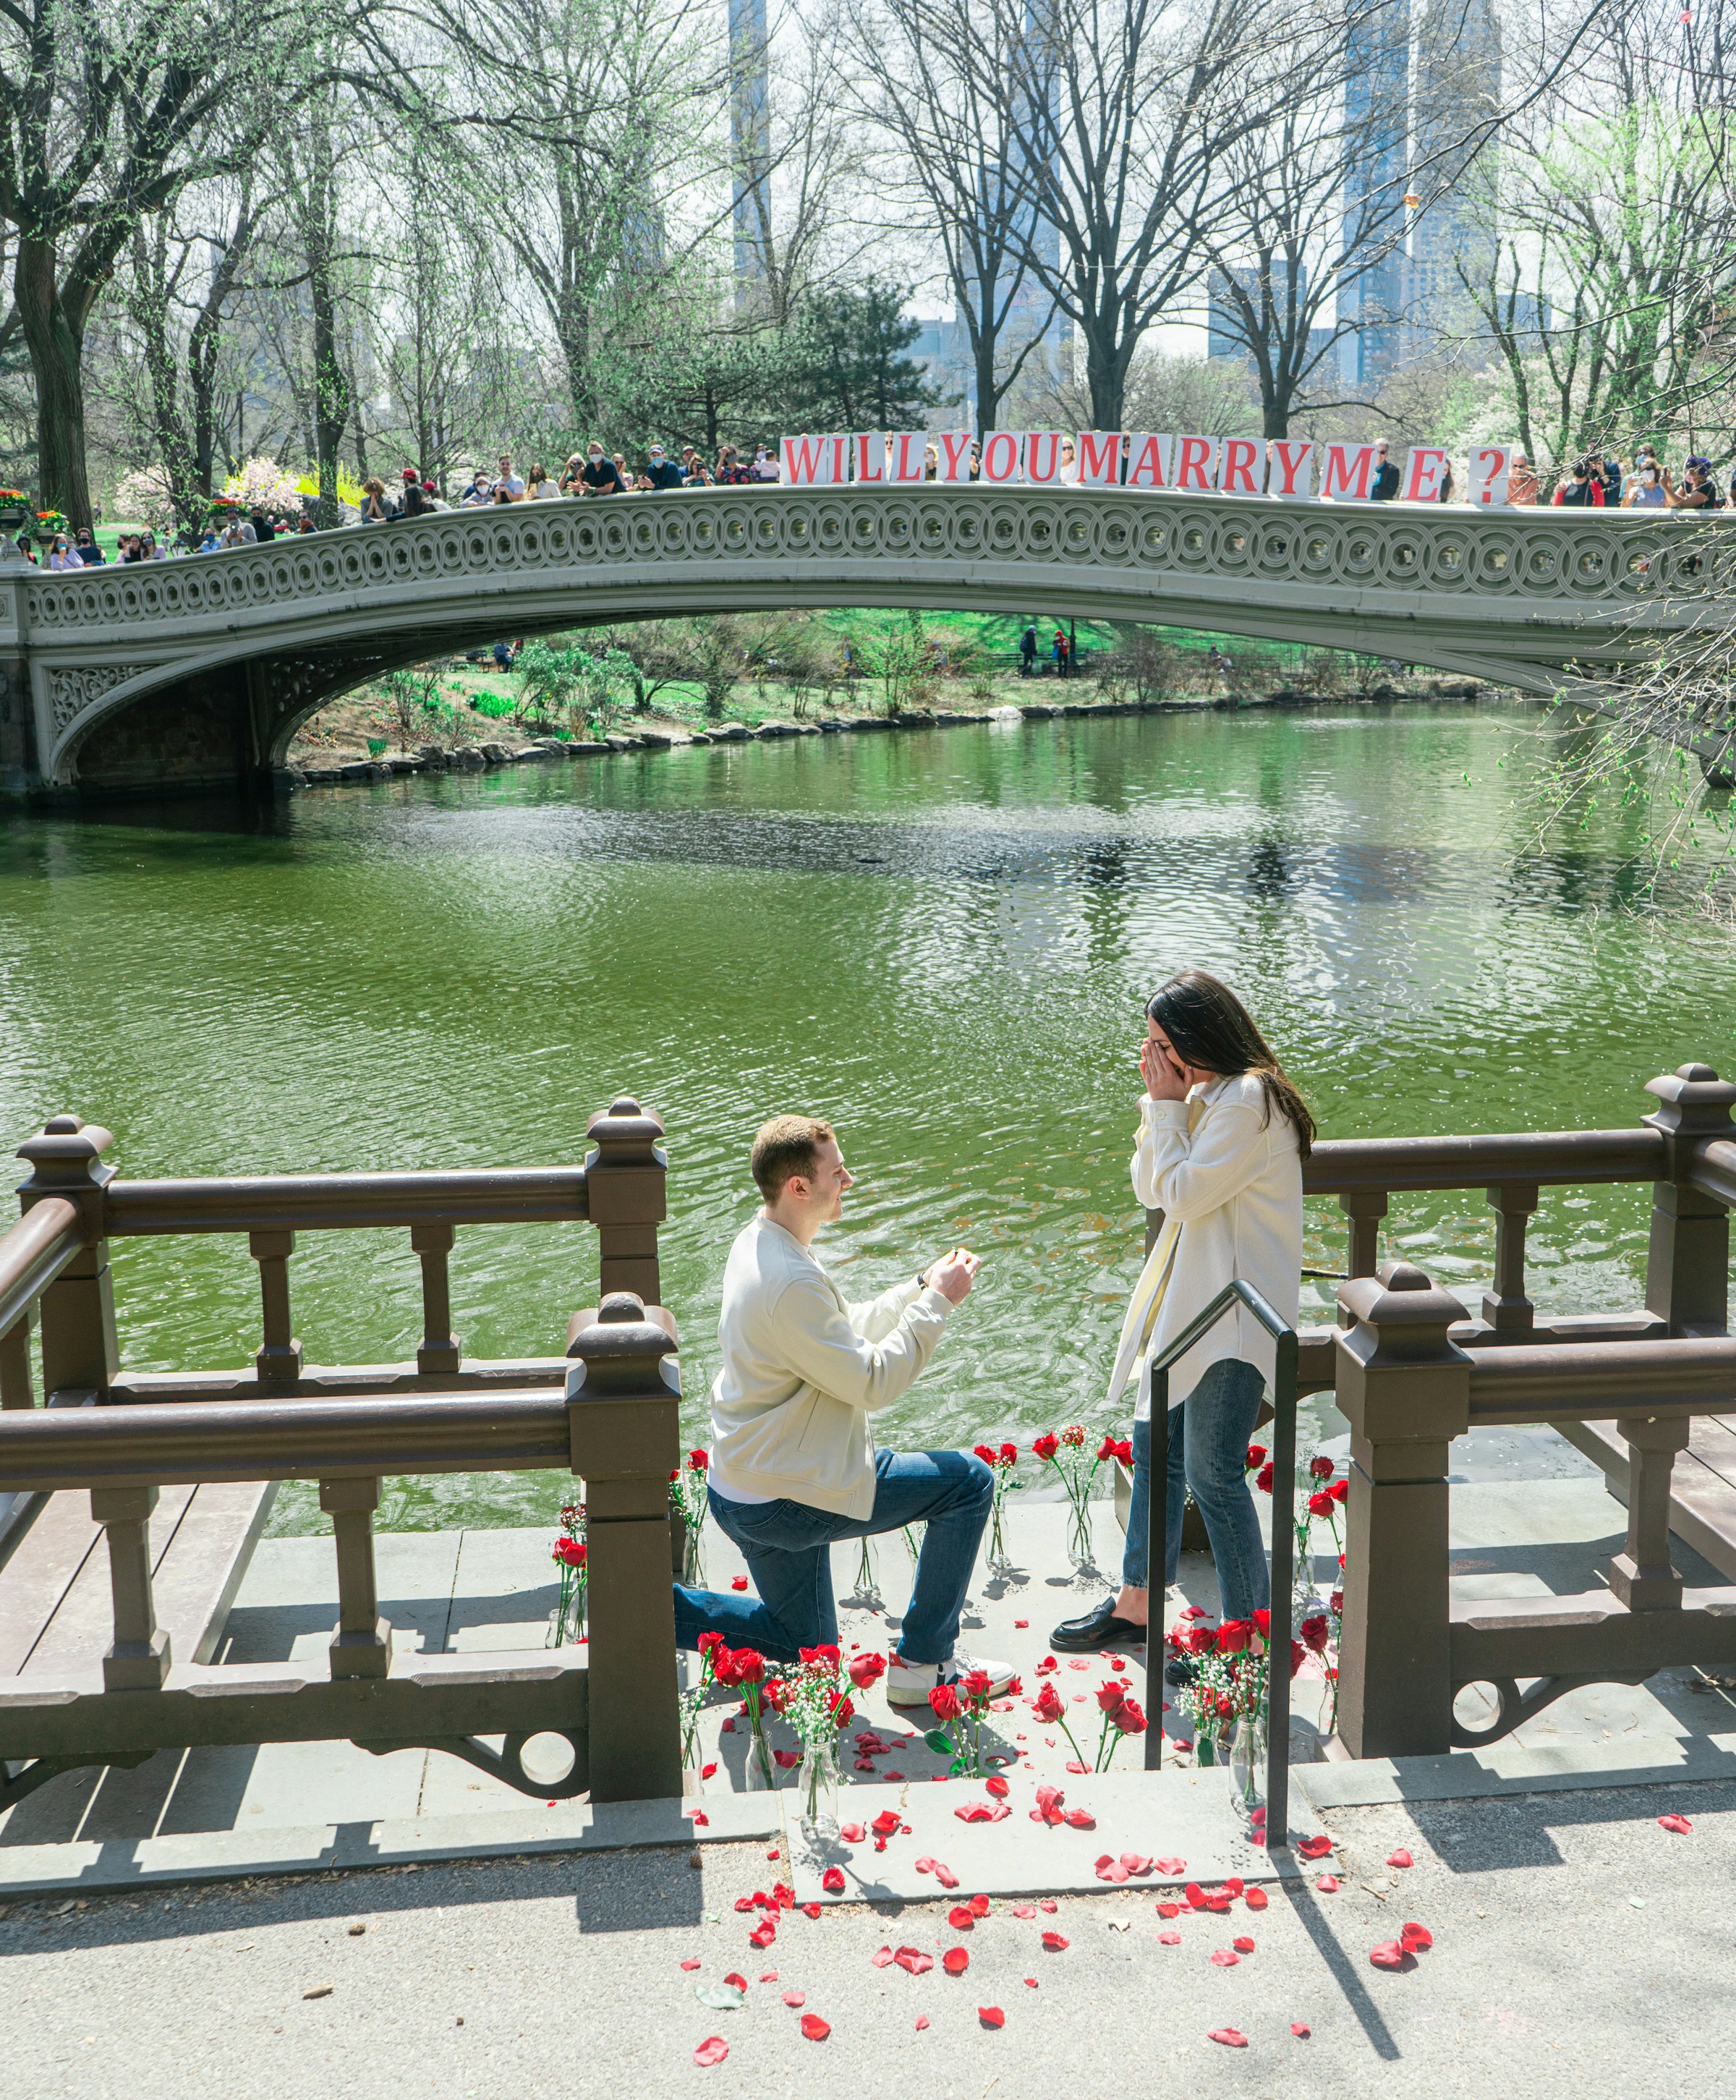 Un hombre proponiéndole matrimonio a una mujer cerca de un lago | Fuente: Unsplash